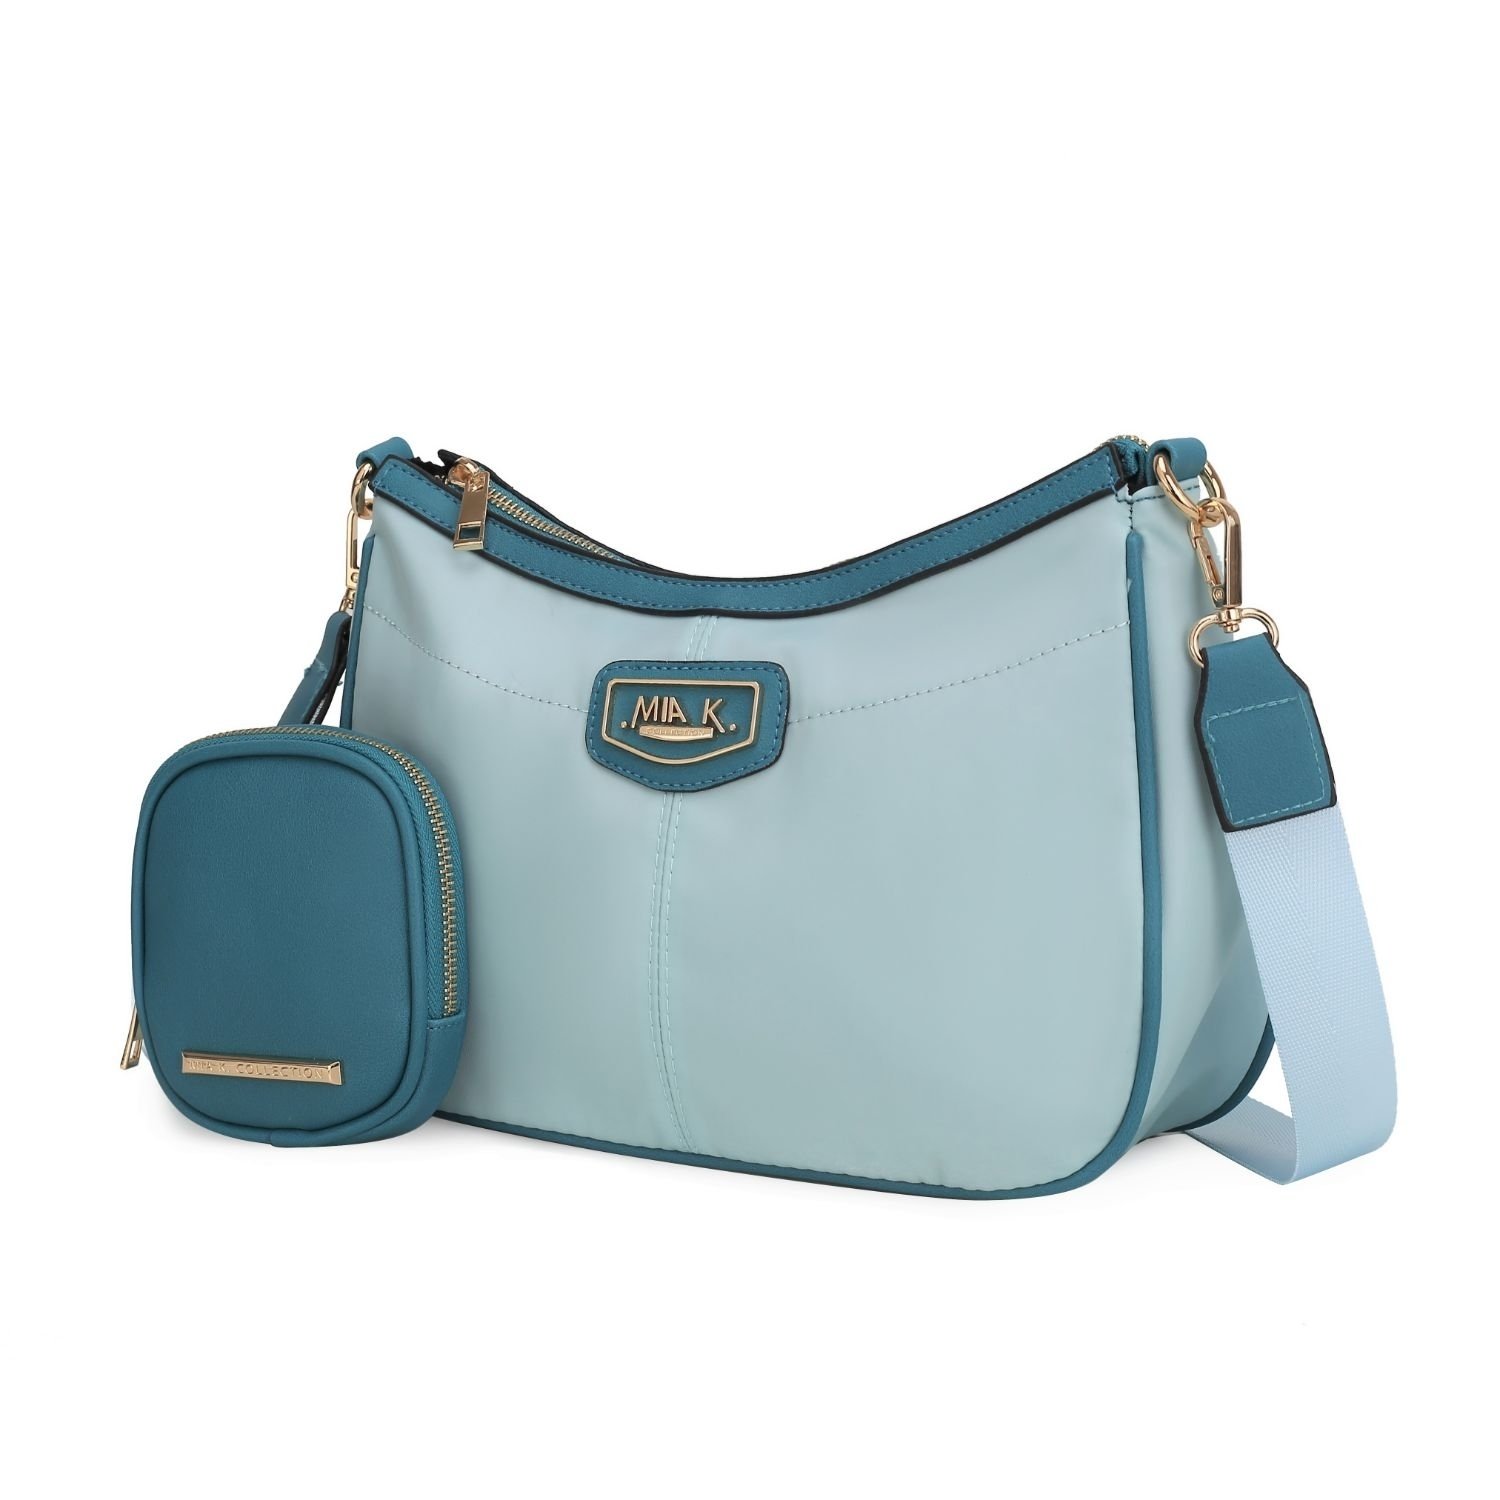 MKF Collection Freya 2-Pc Crossbody Handbag By Mia K - Light Blue - Turquoise